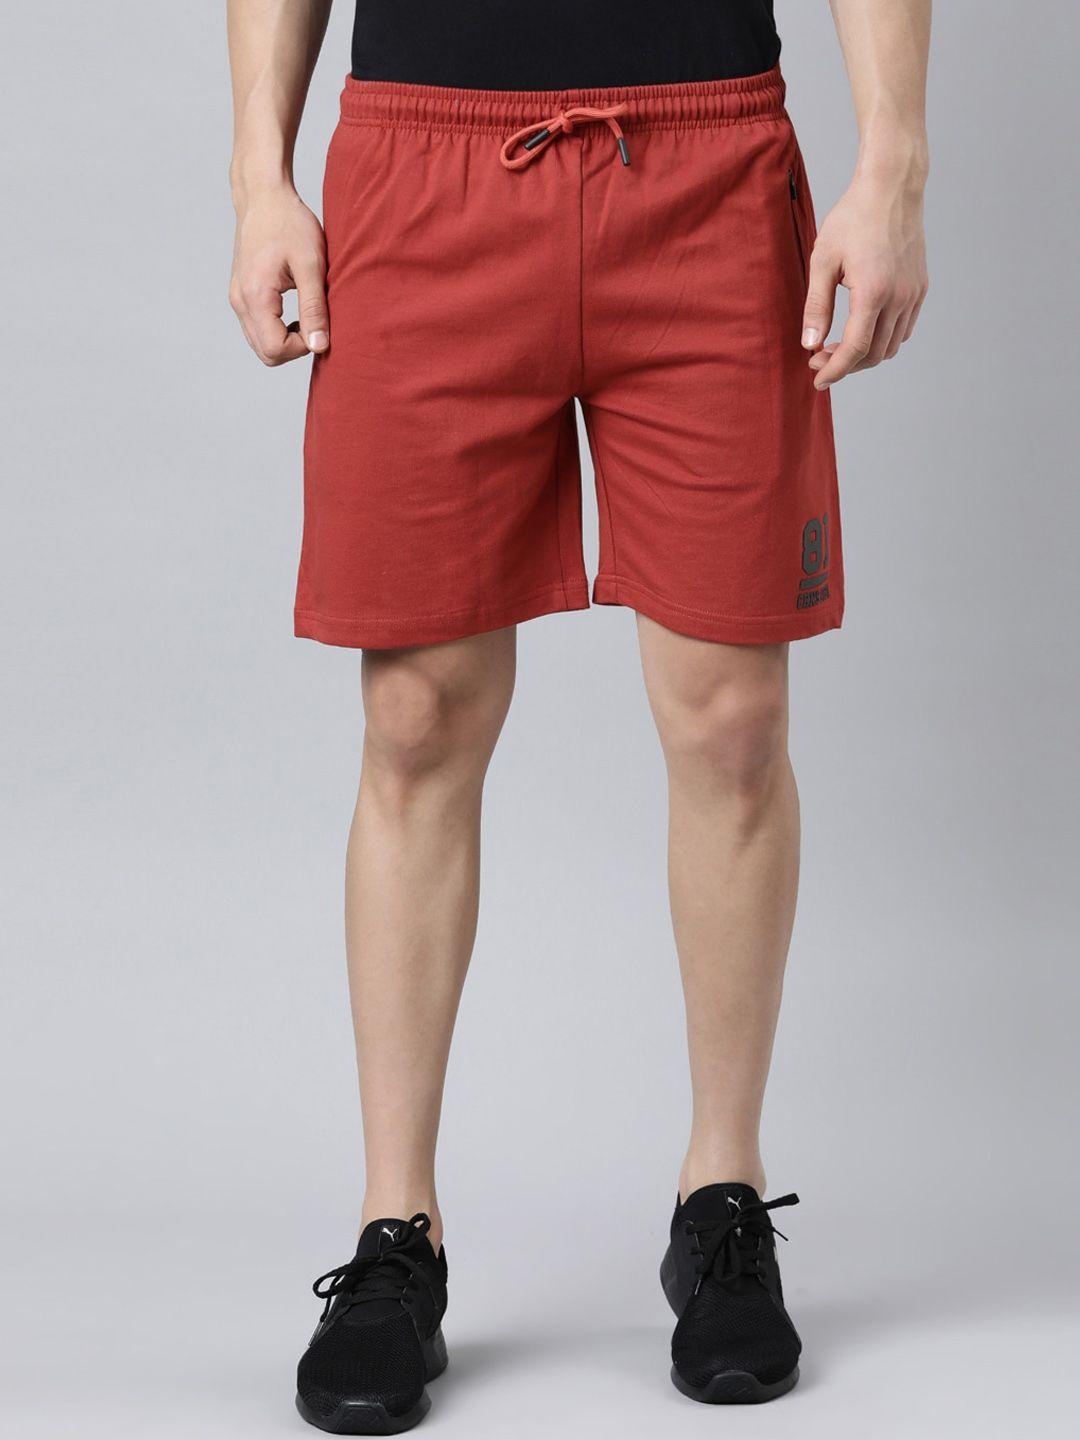 chennis men sports cotton shorts